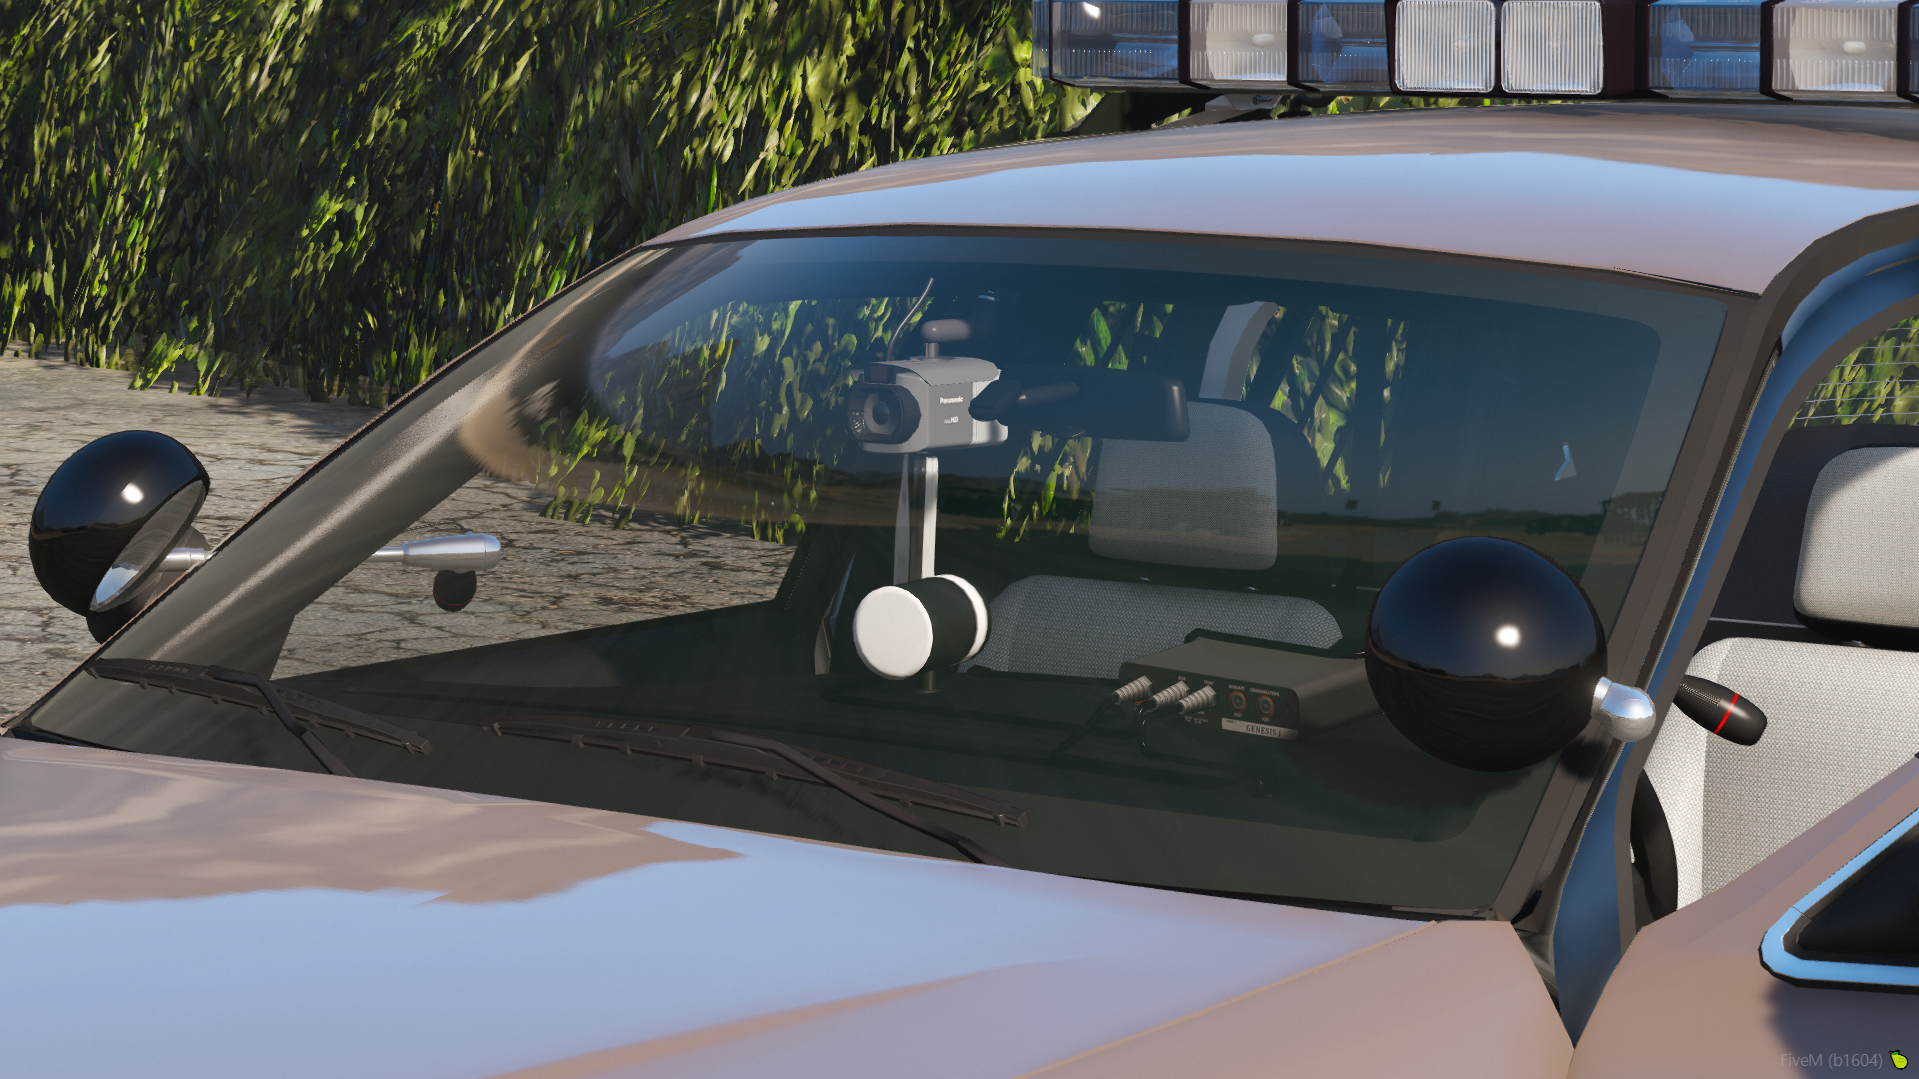 A NON-ELS Crown Victoria police car with retro graphics